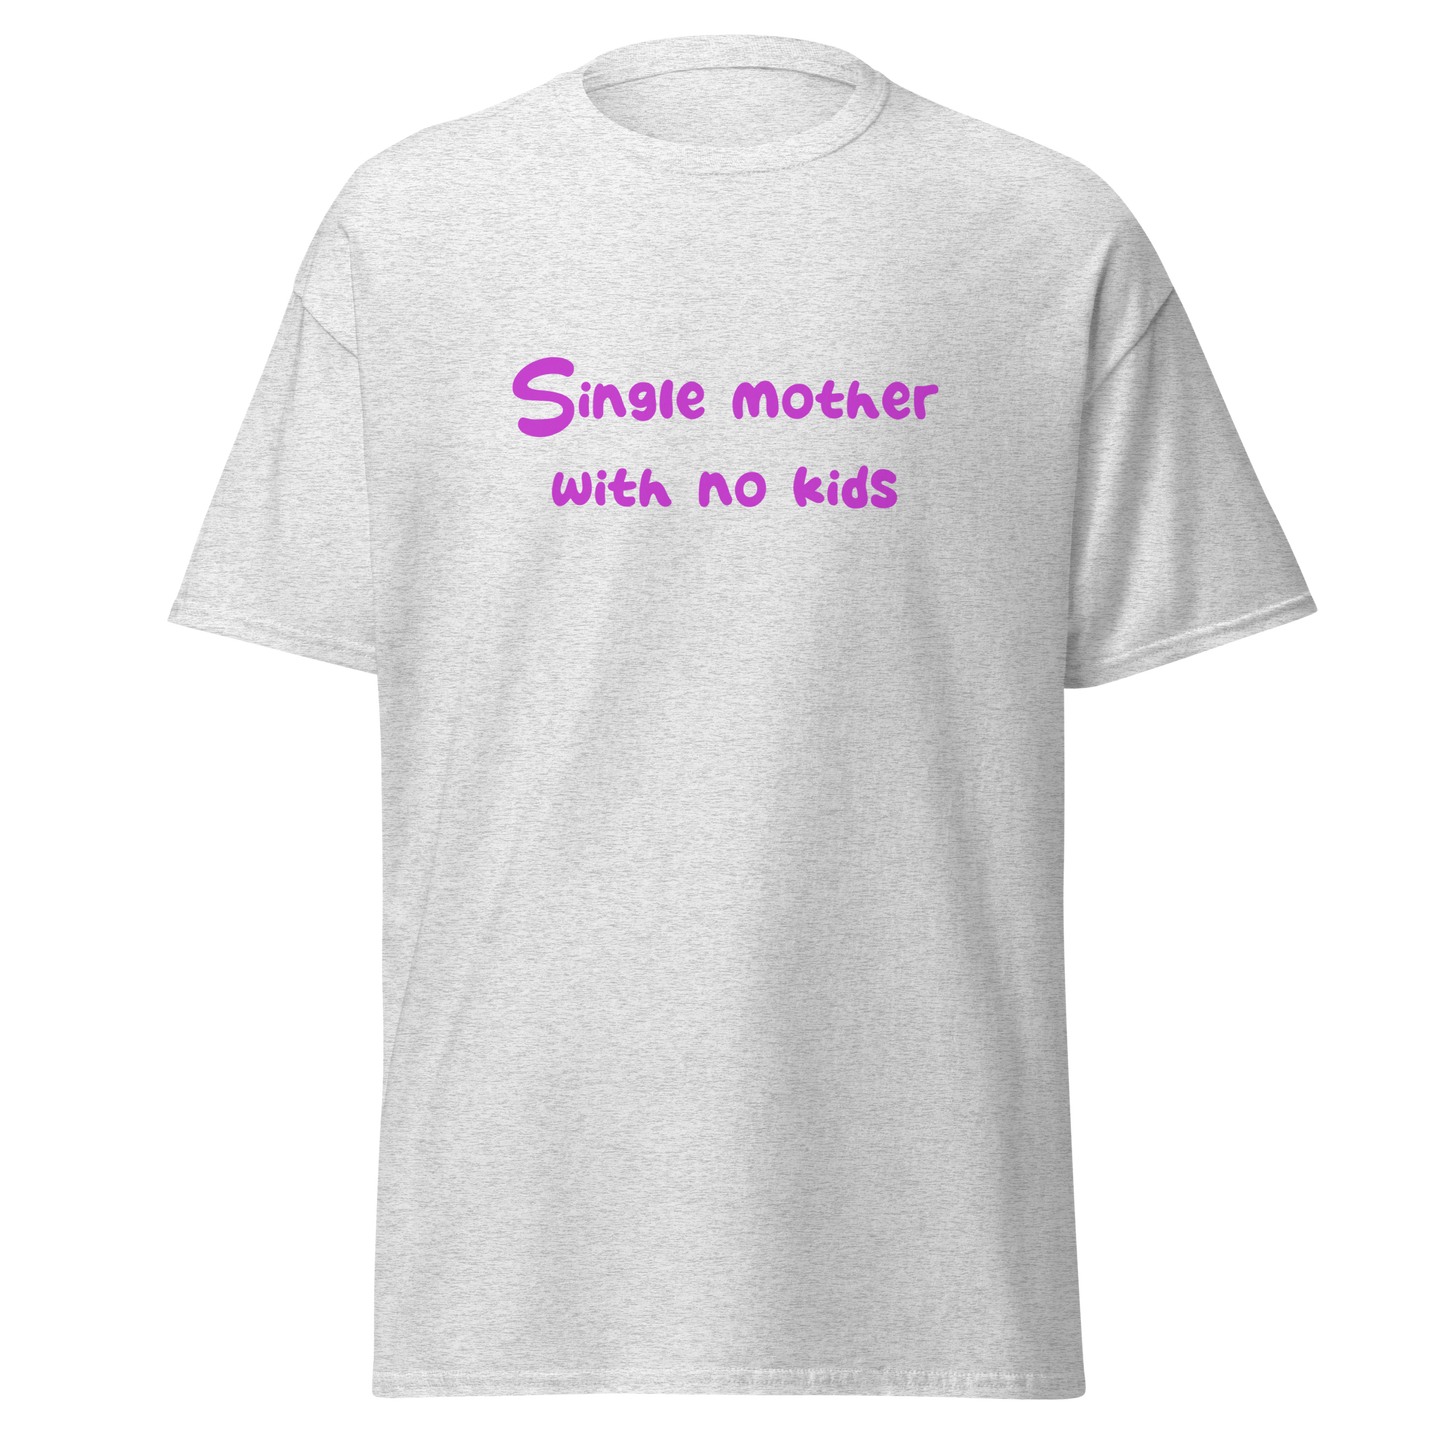 Single Mother, No Kids T-Shirt